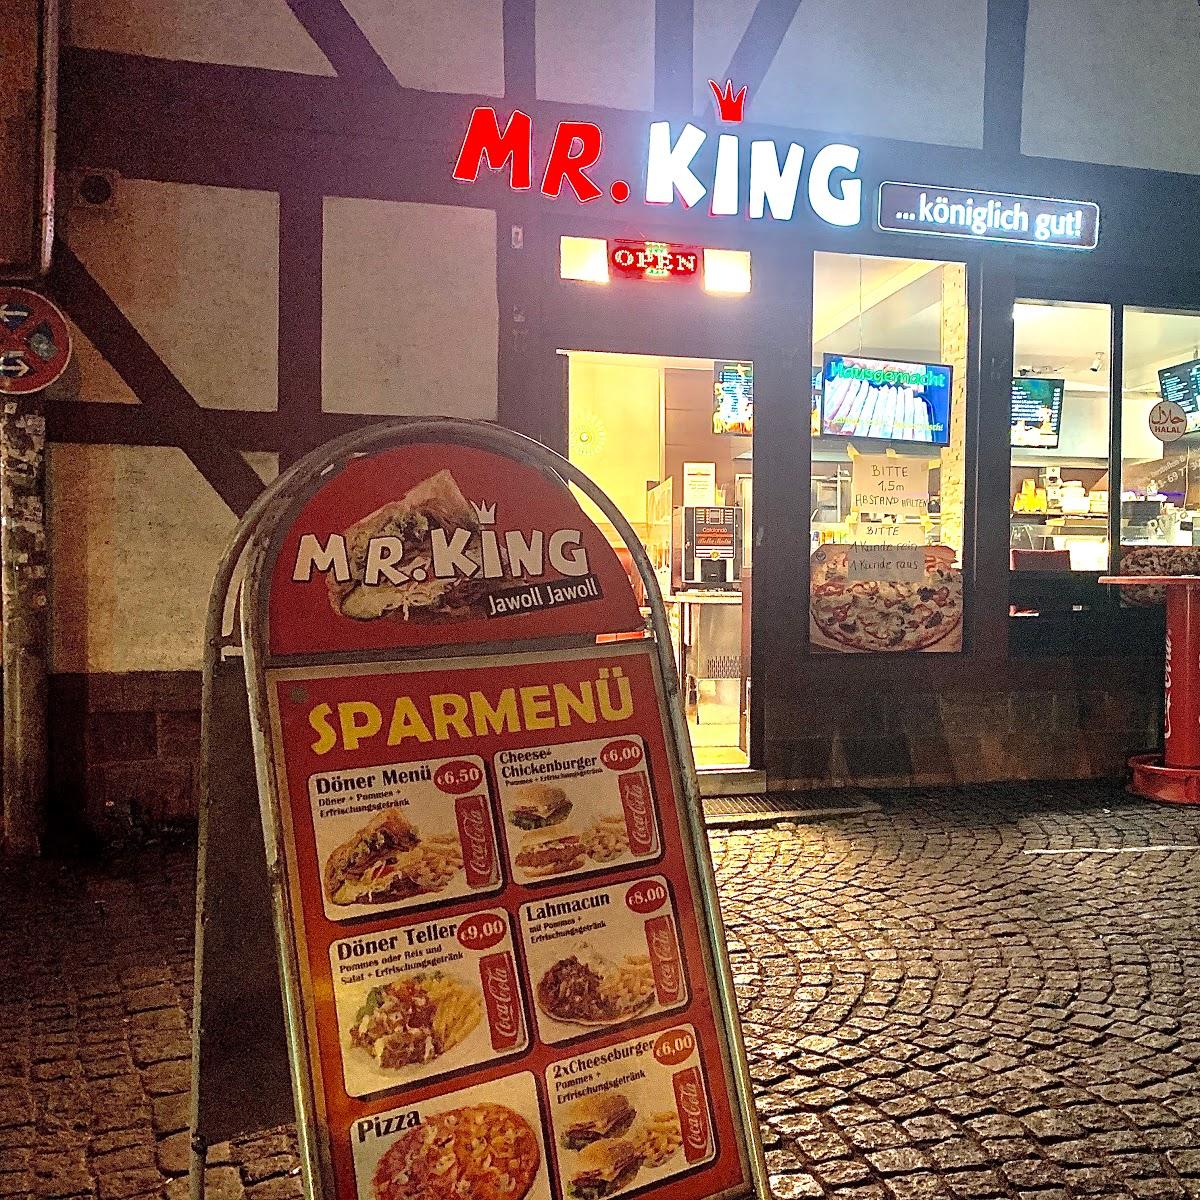 Restaurant "Mr. King  Jawoll Jawoll" in Marburg